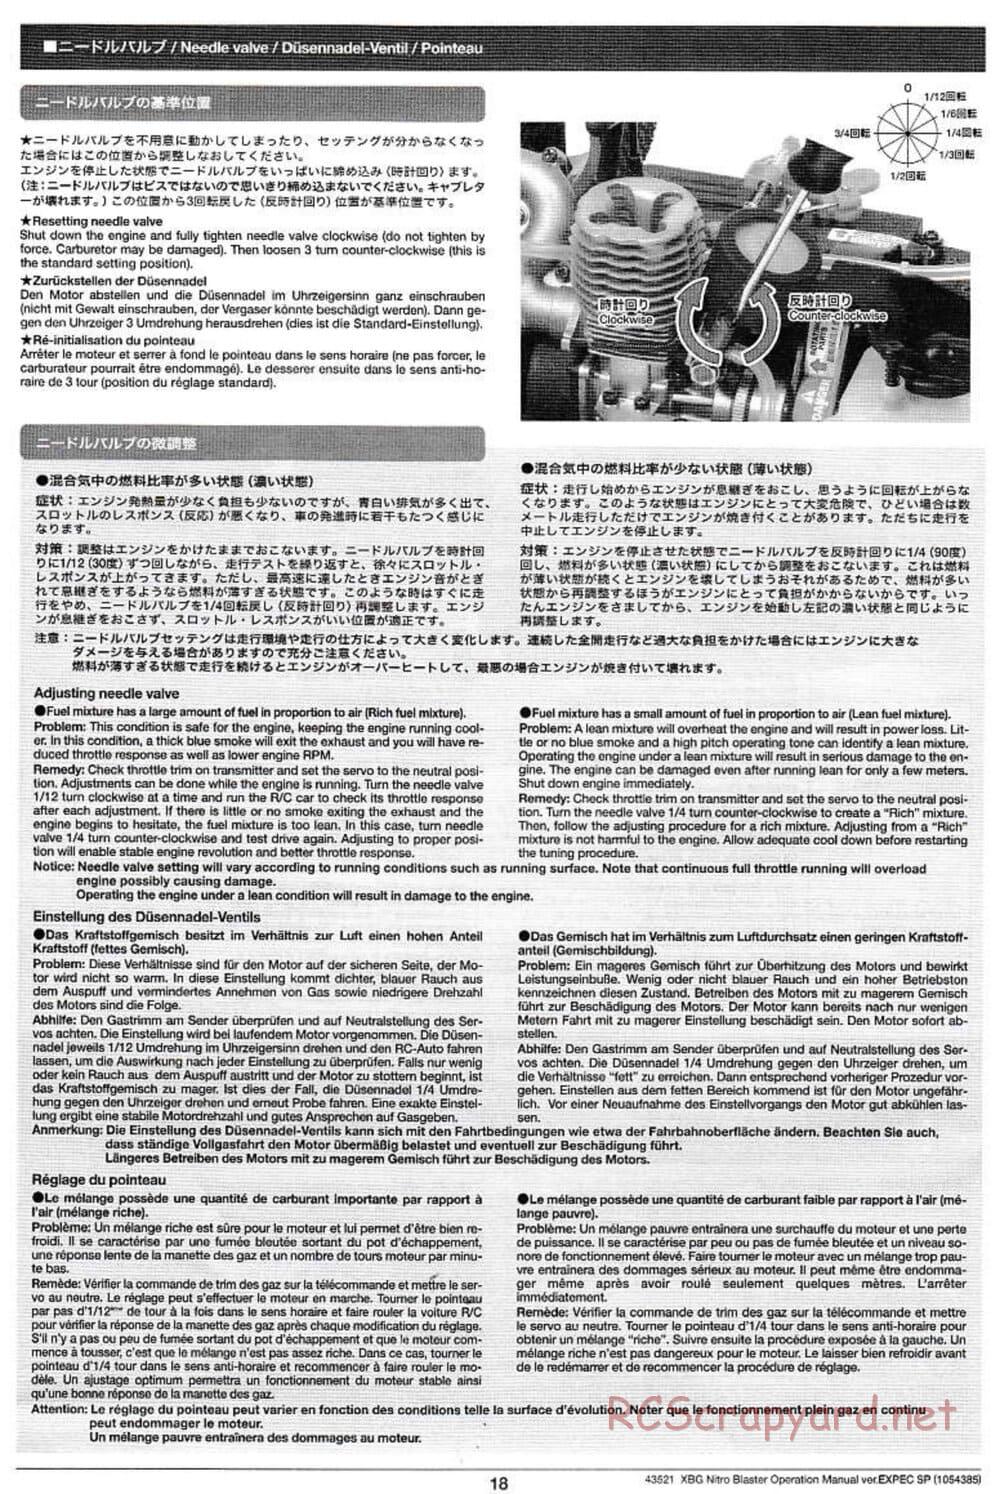 Tamiya - Nitro Blaster - NDF-01 - Operating Manual - Page 18